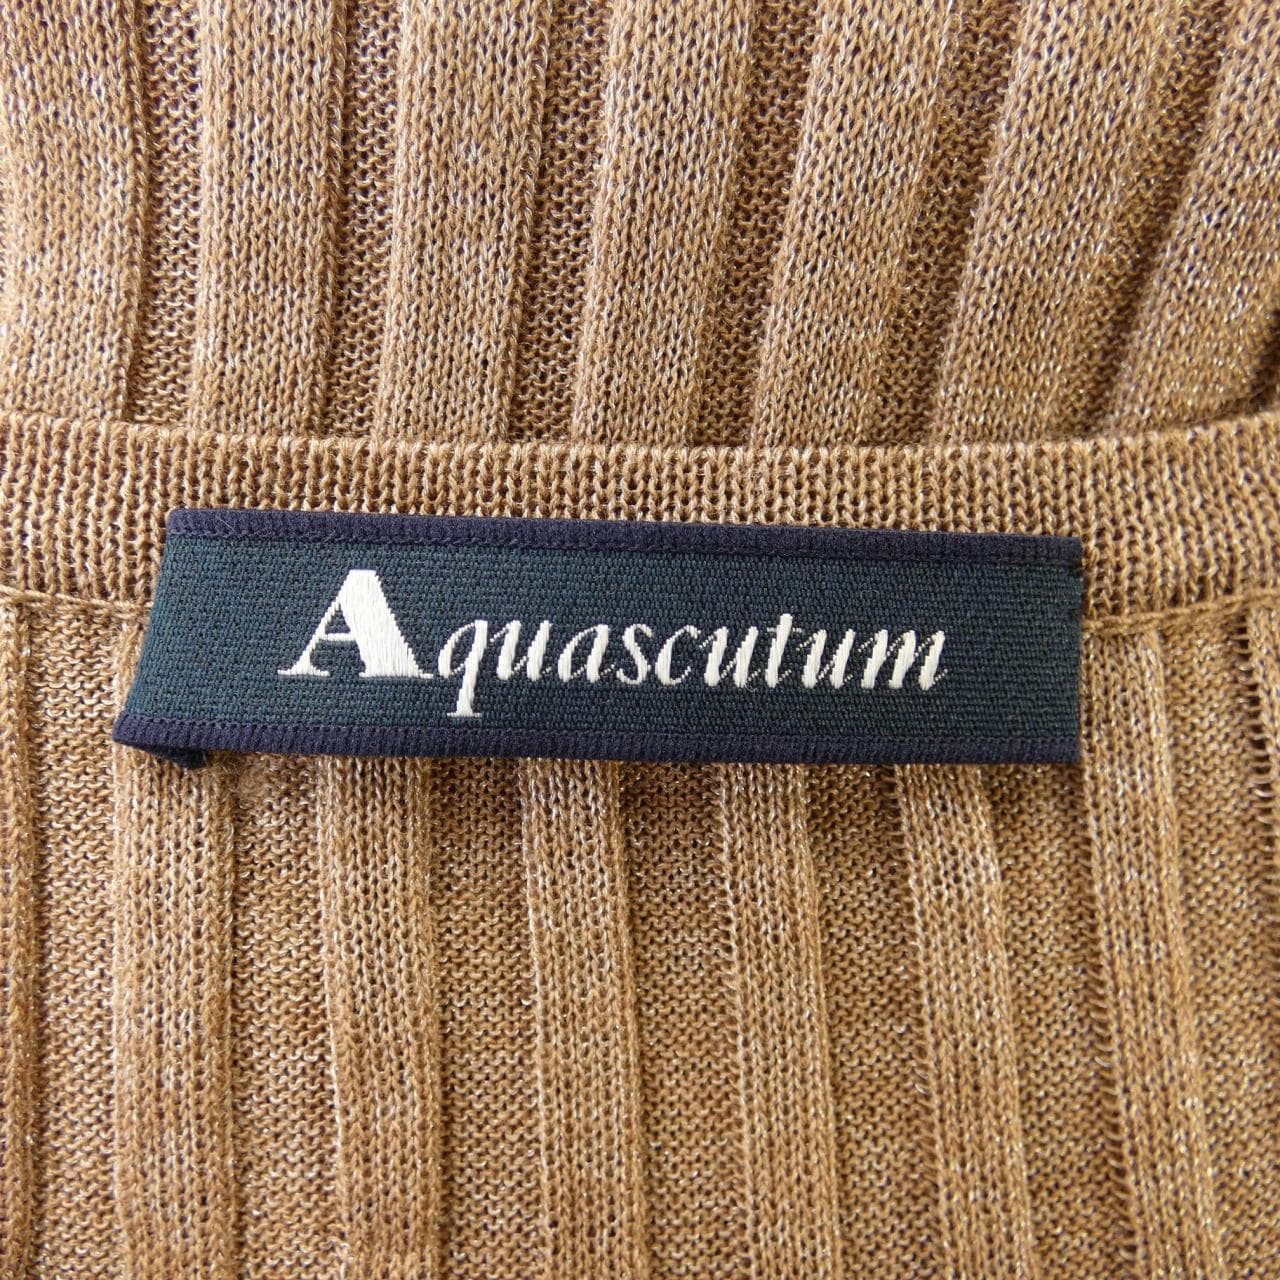 Aquascutum上衣